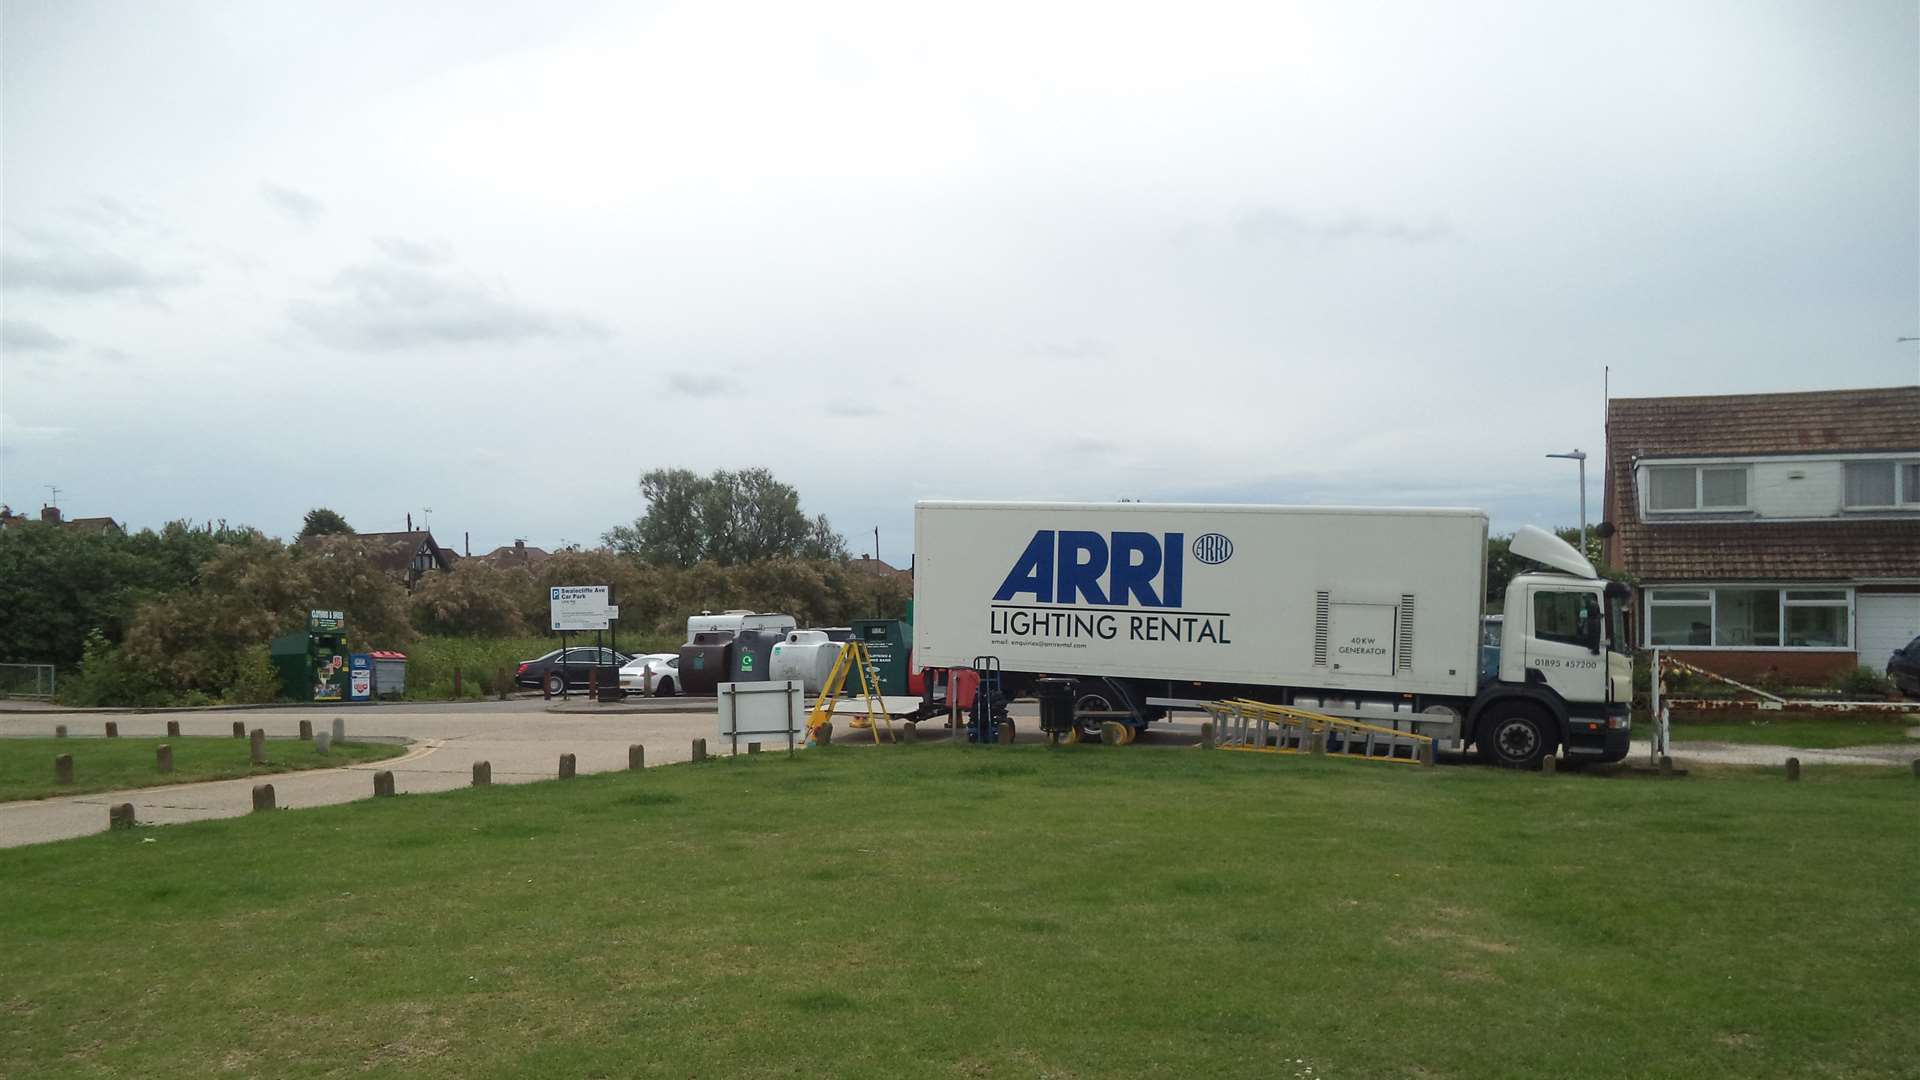 Large lorries and vans parked in Hampton